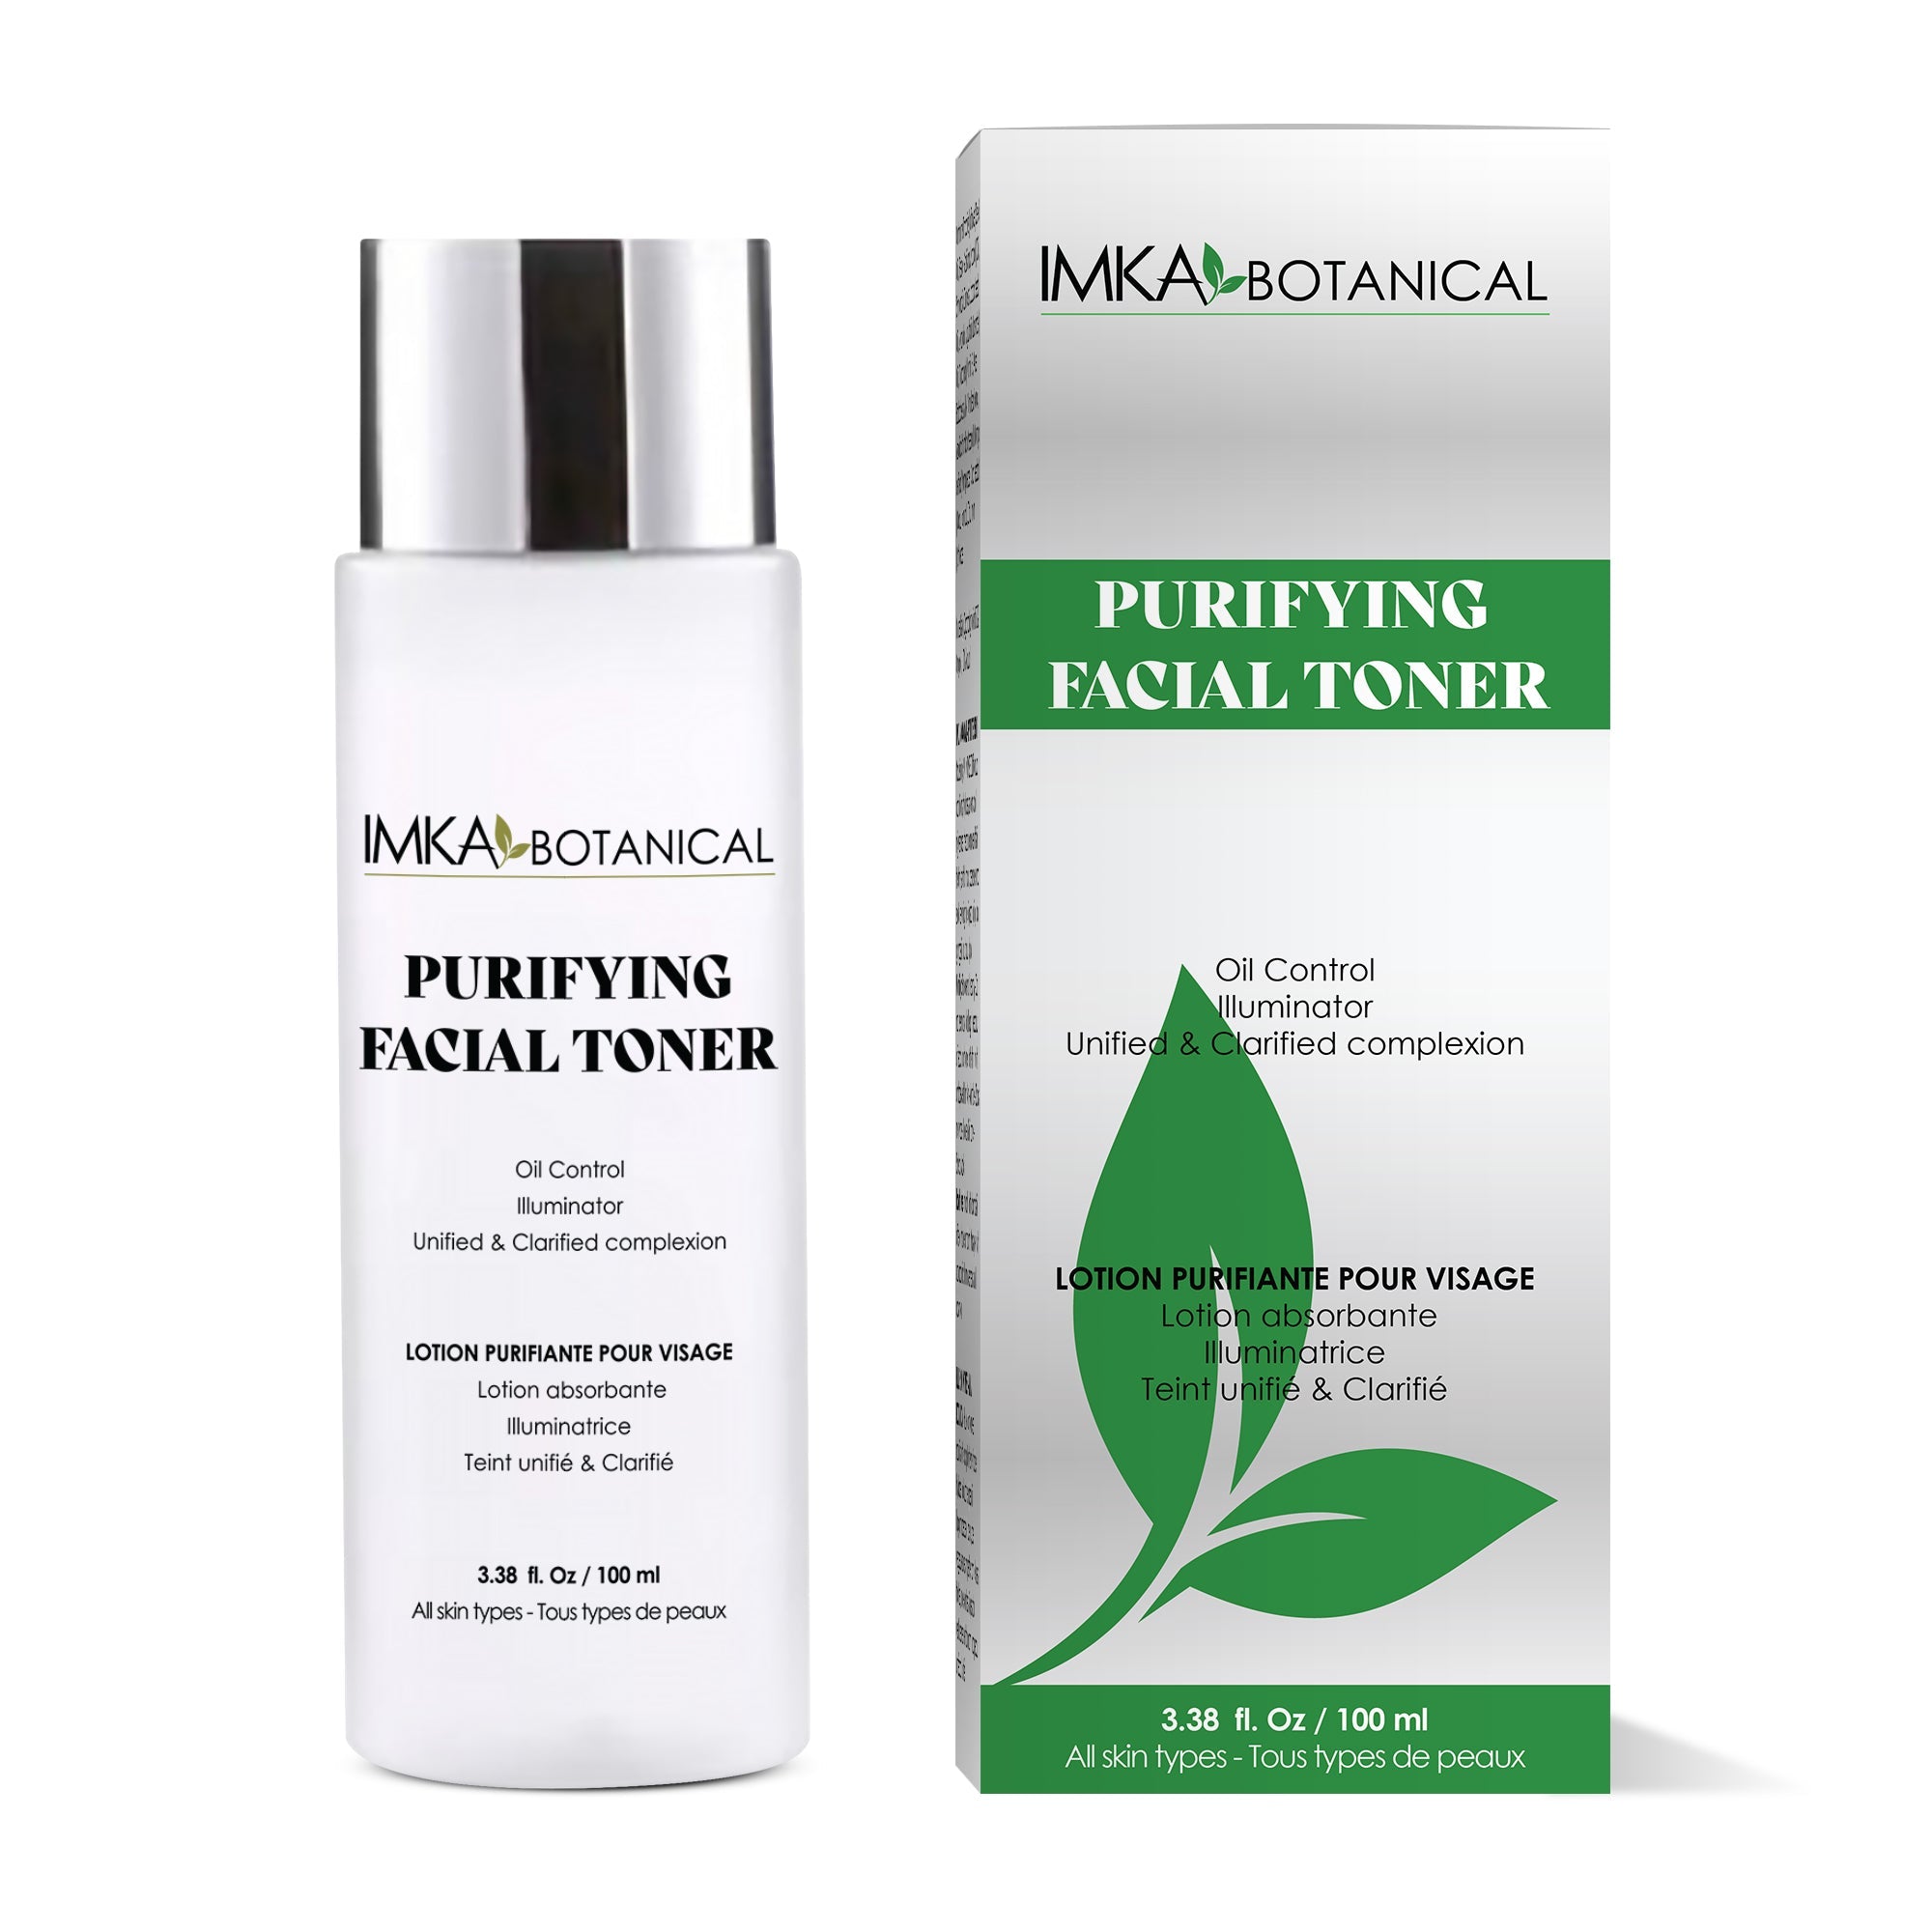 IMKA BOTANICAL  - PURIFYING & CLEANSING TONER - Purifies. Refines pores. Balances skin.  For all skin types